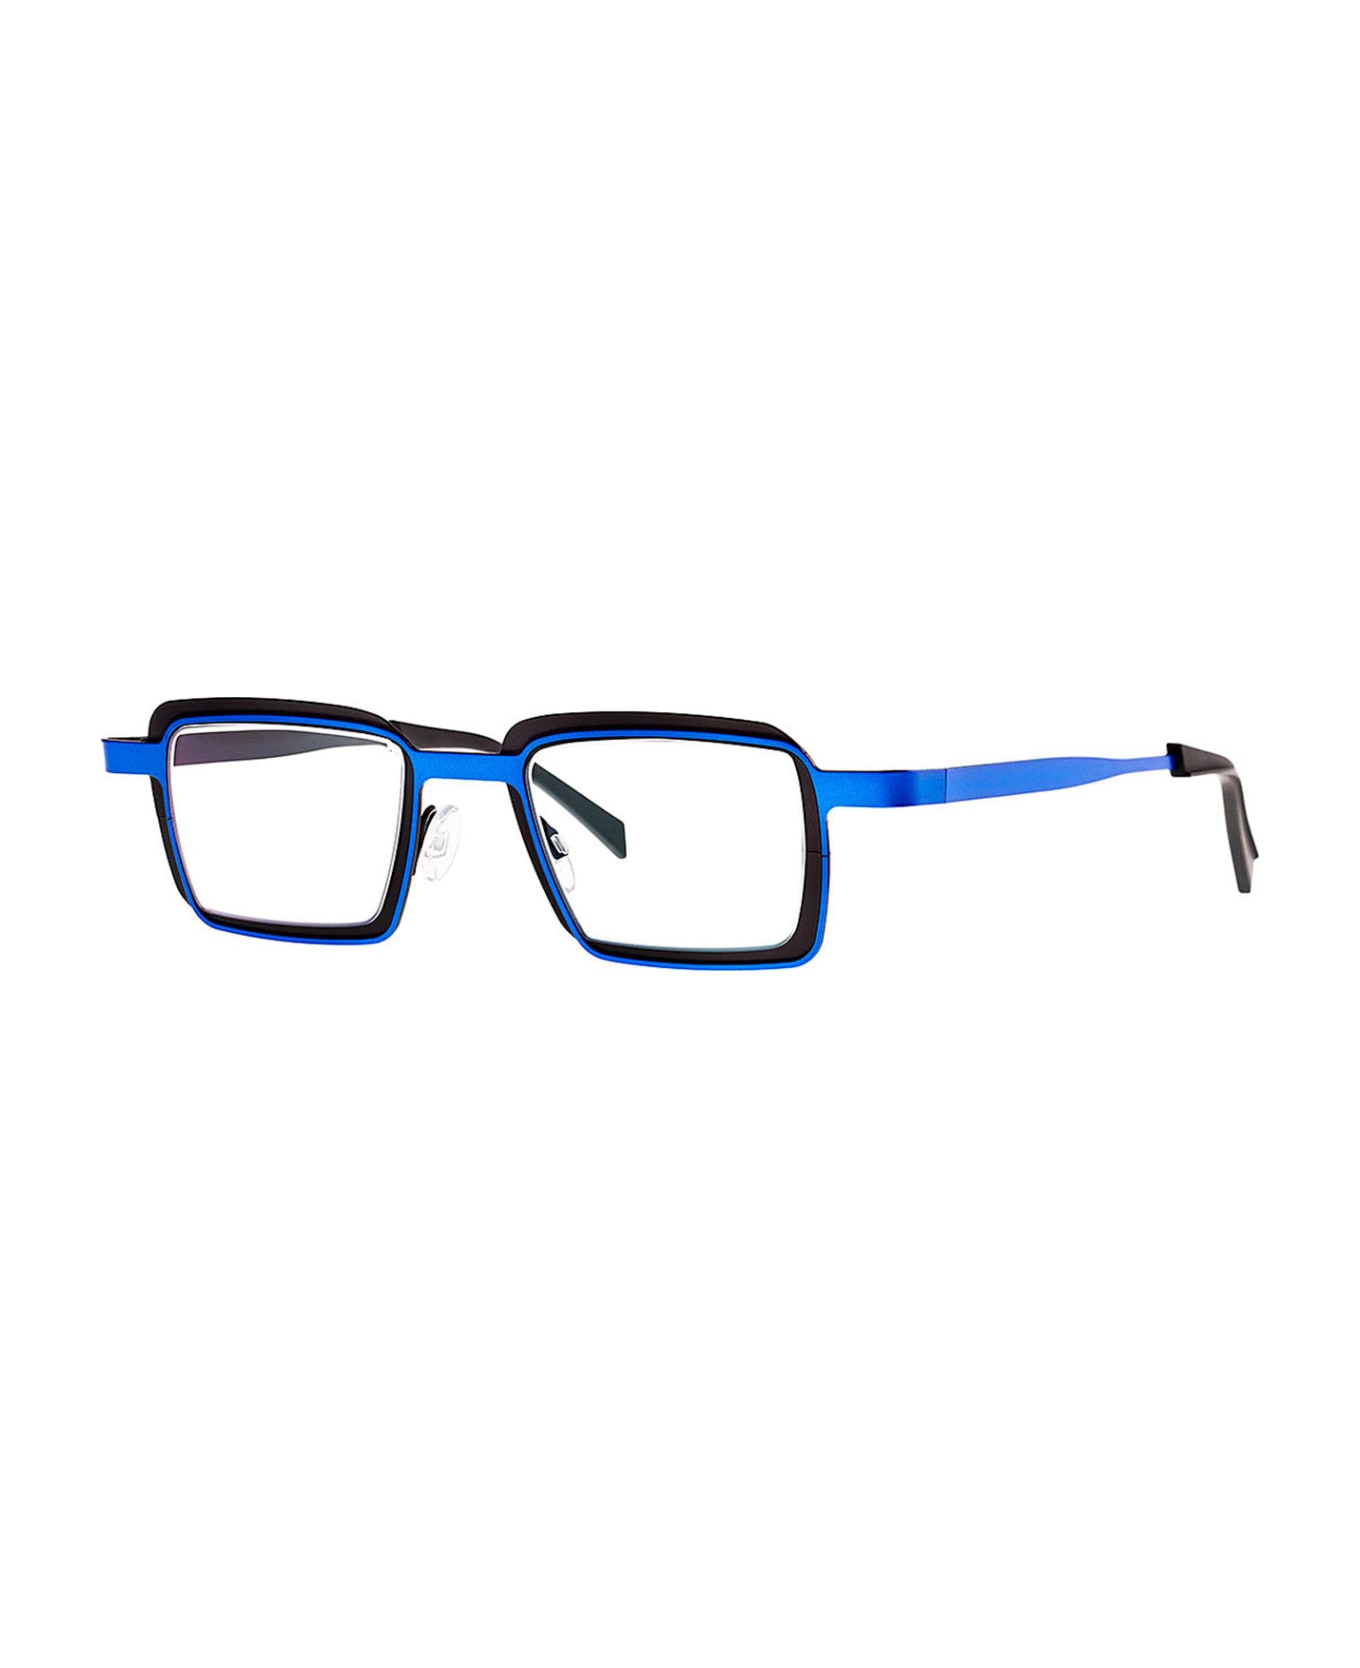 Theo Eyewear Eye Witness Yc 365 Glasses - Black/Blue アイウェア